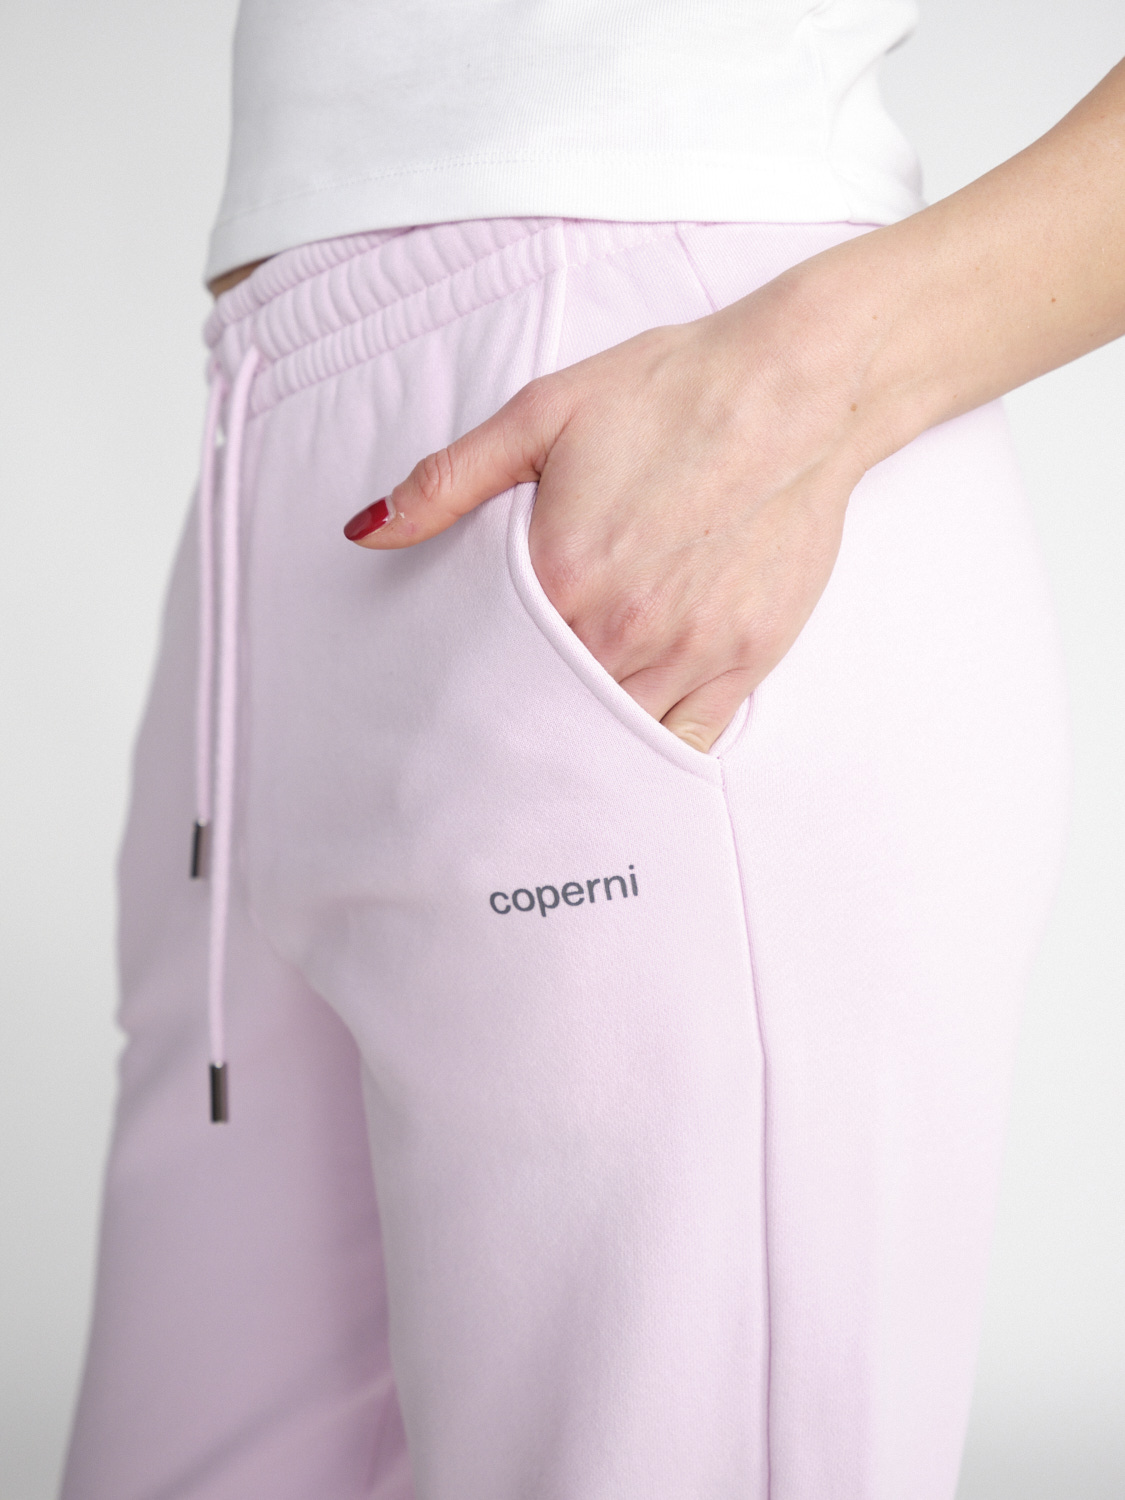 Coperni Sportif jogg-pants en coton mélangé rosa S